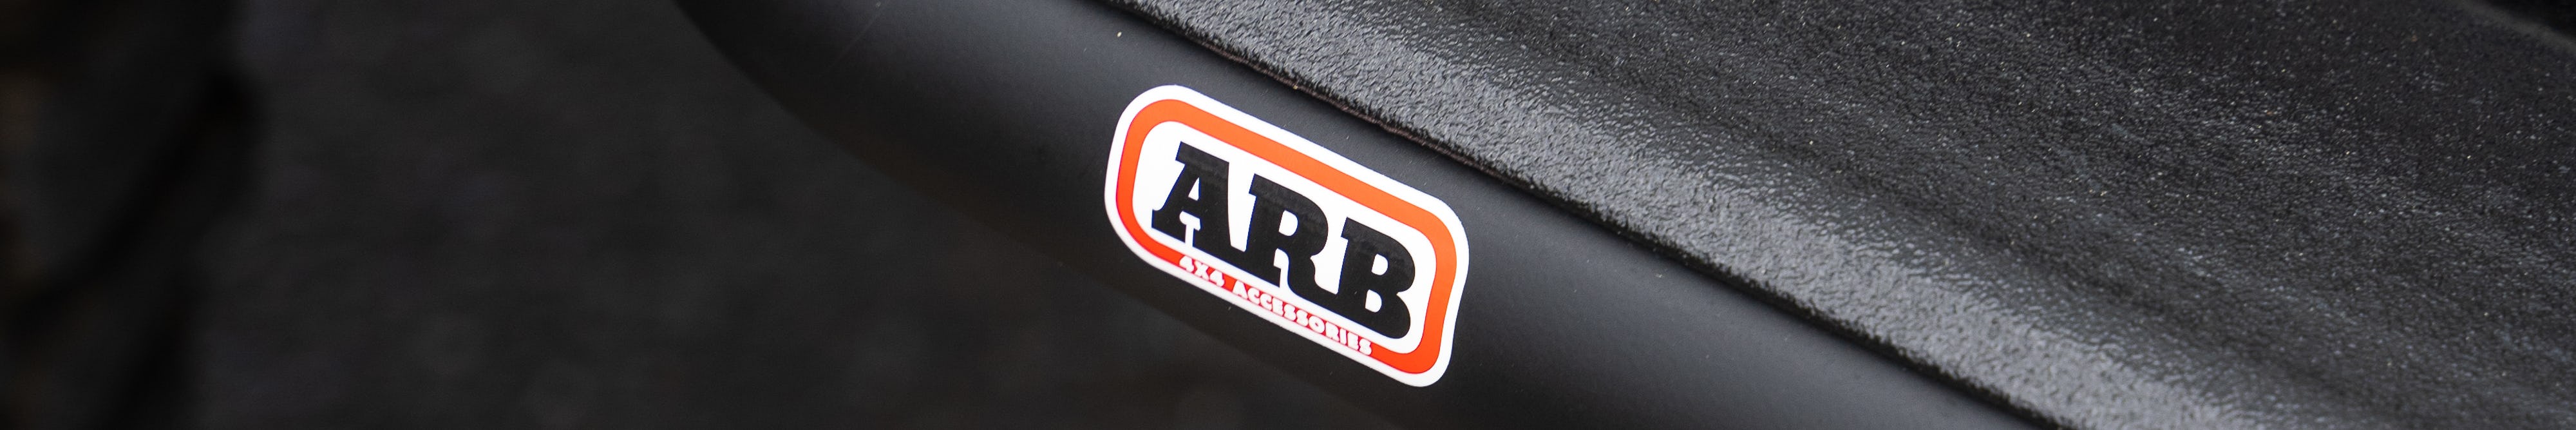 ARB 4x4 Accessories logo